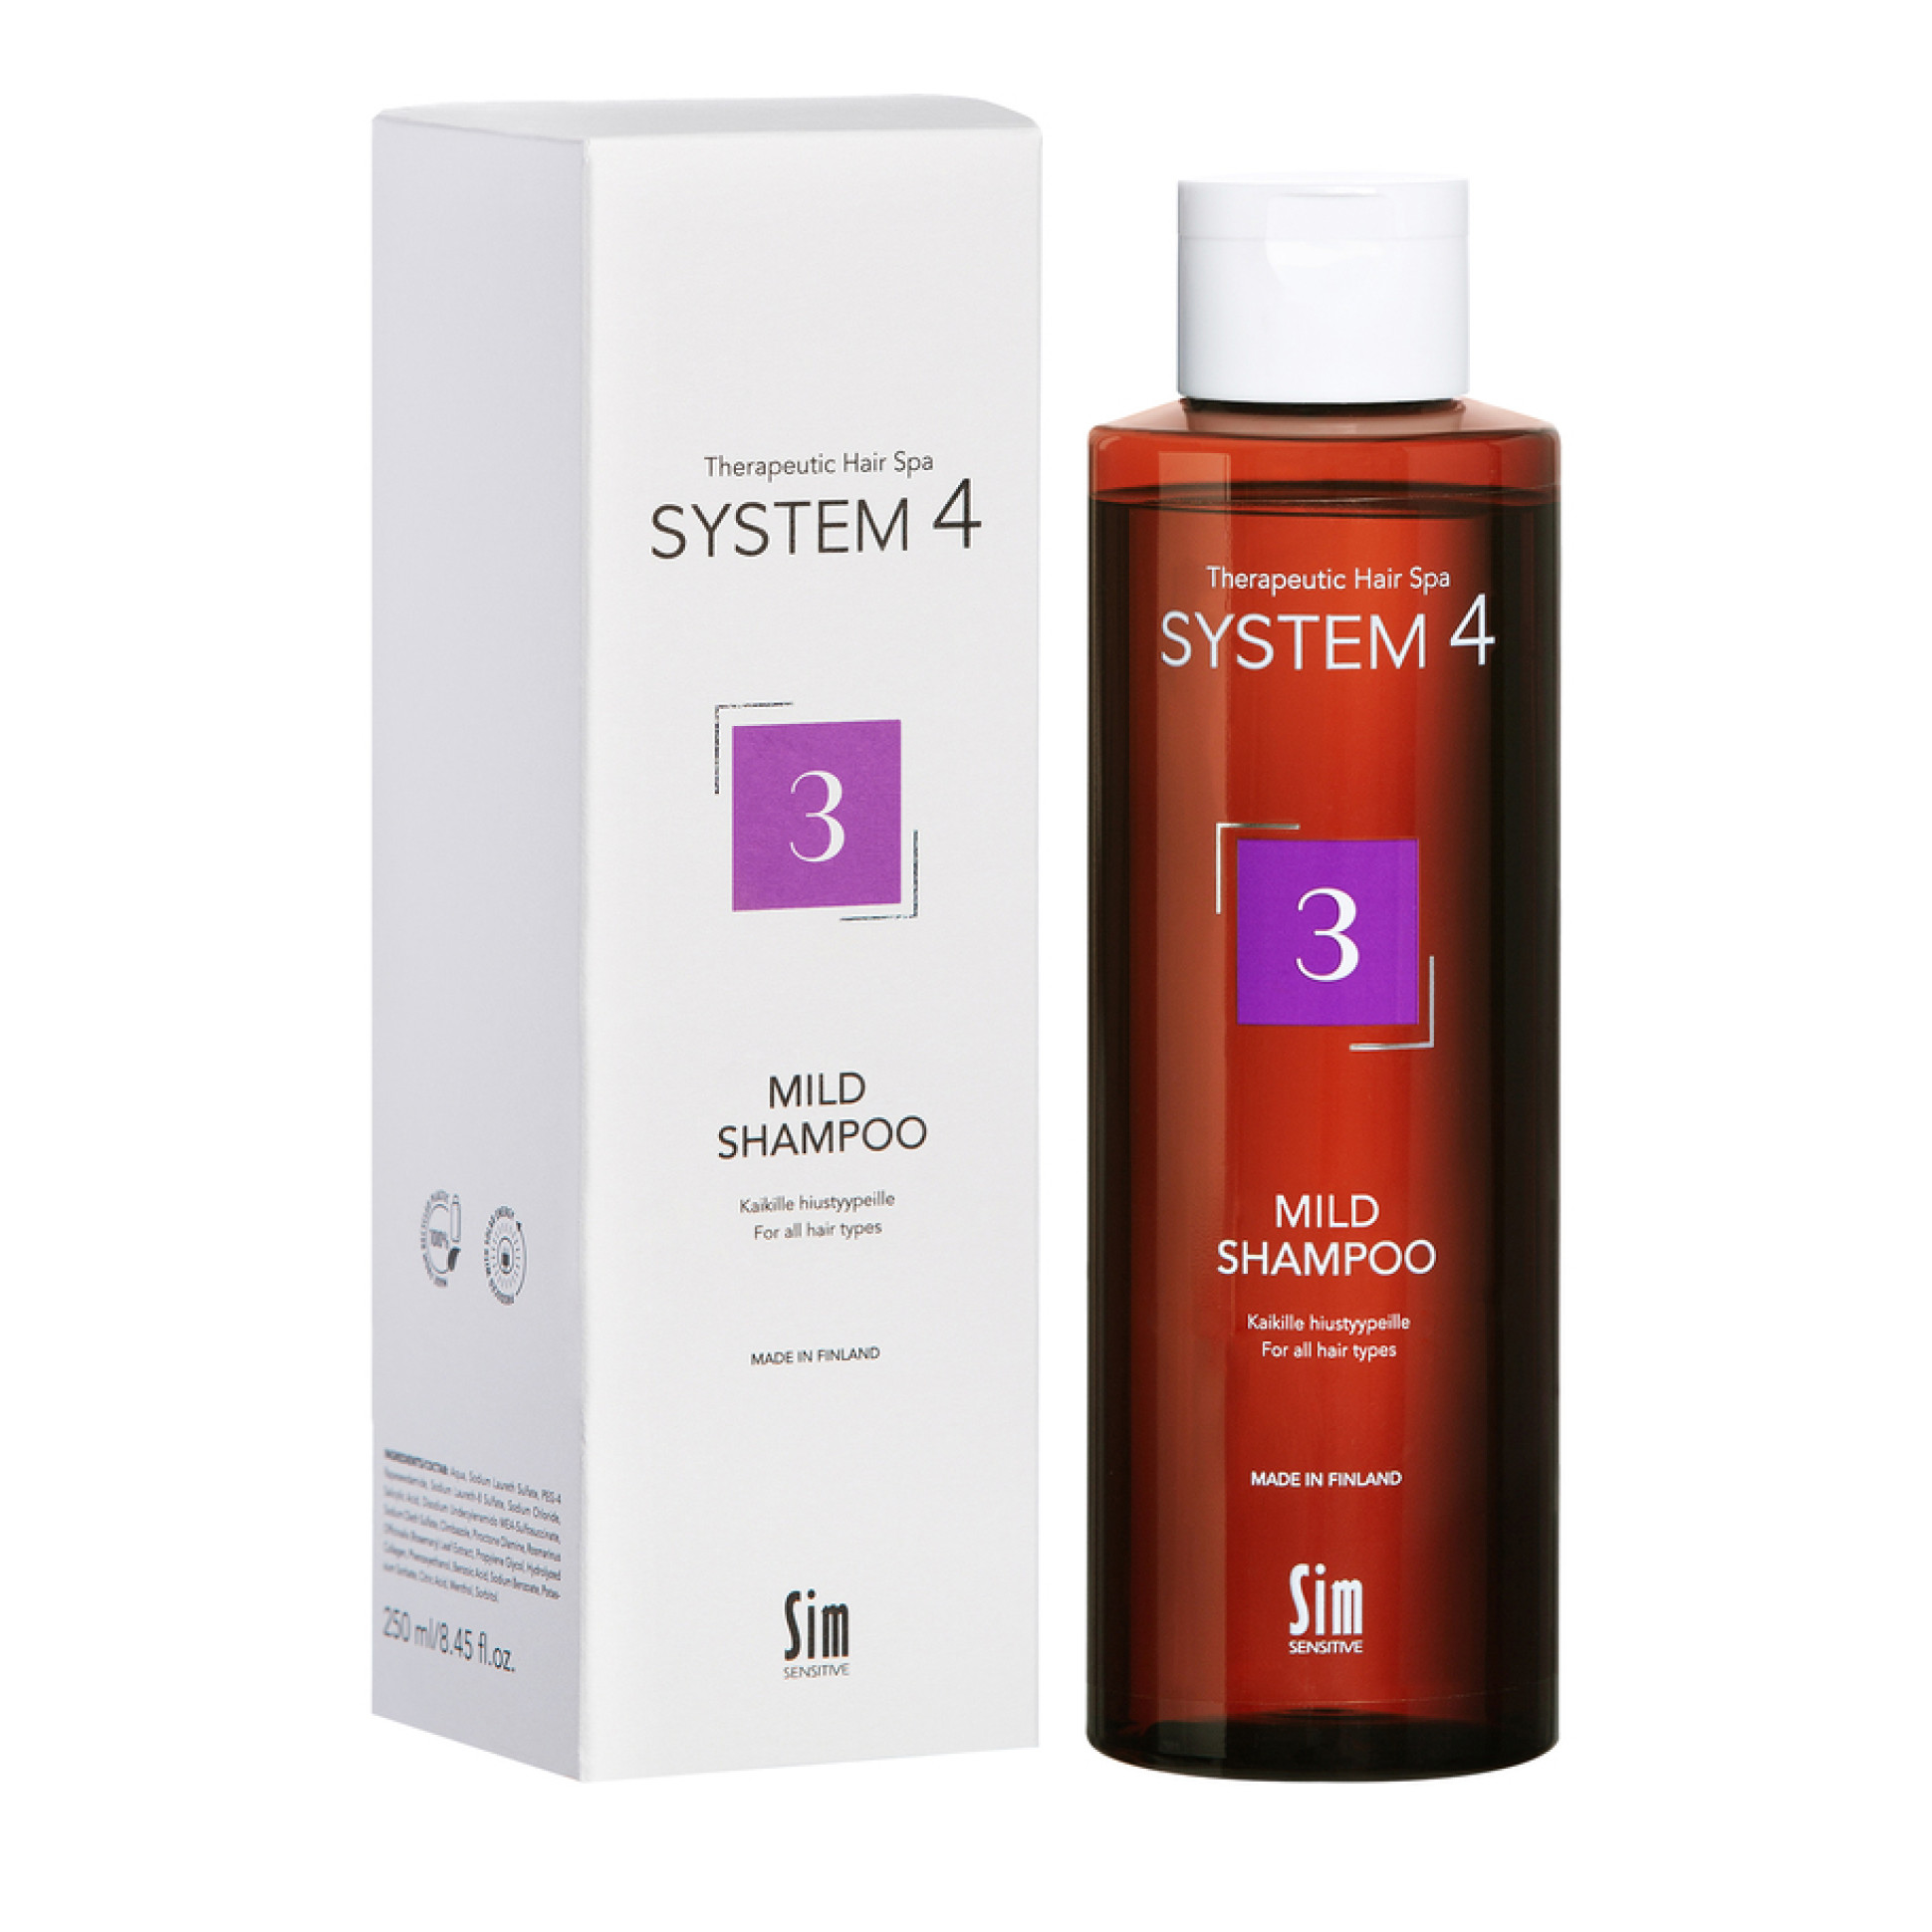 system 4 mild shampoo